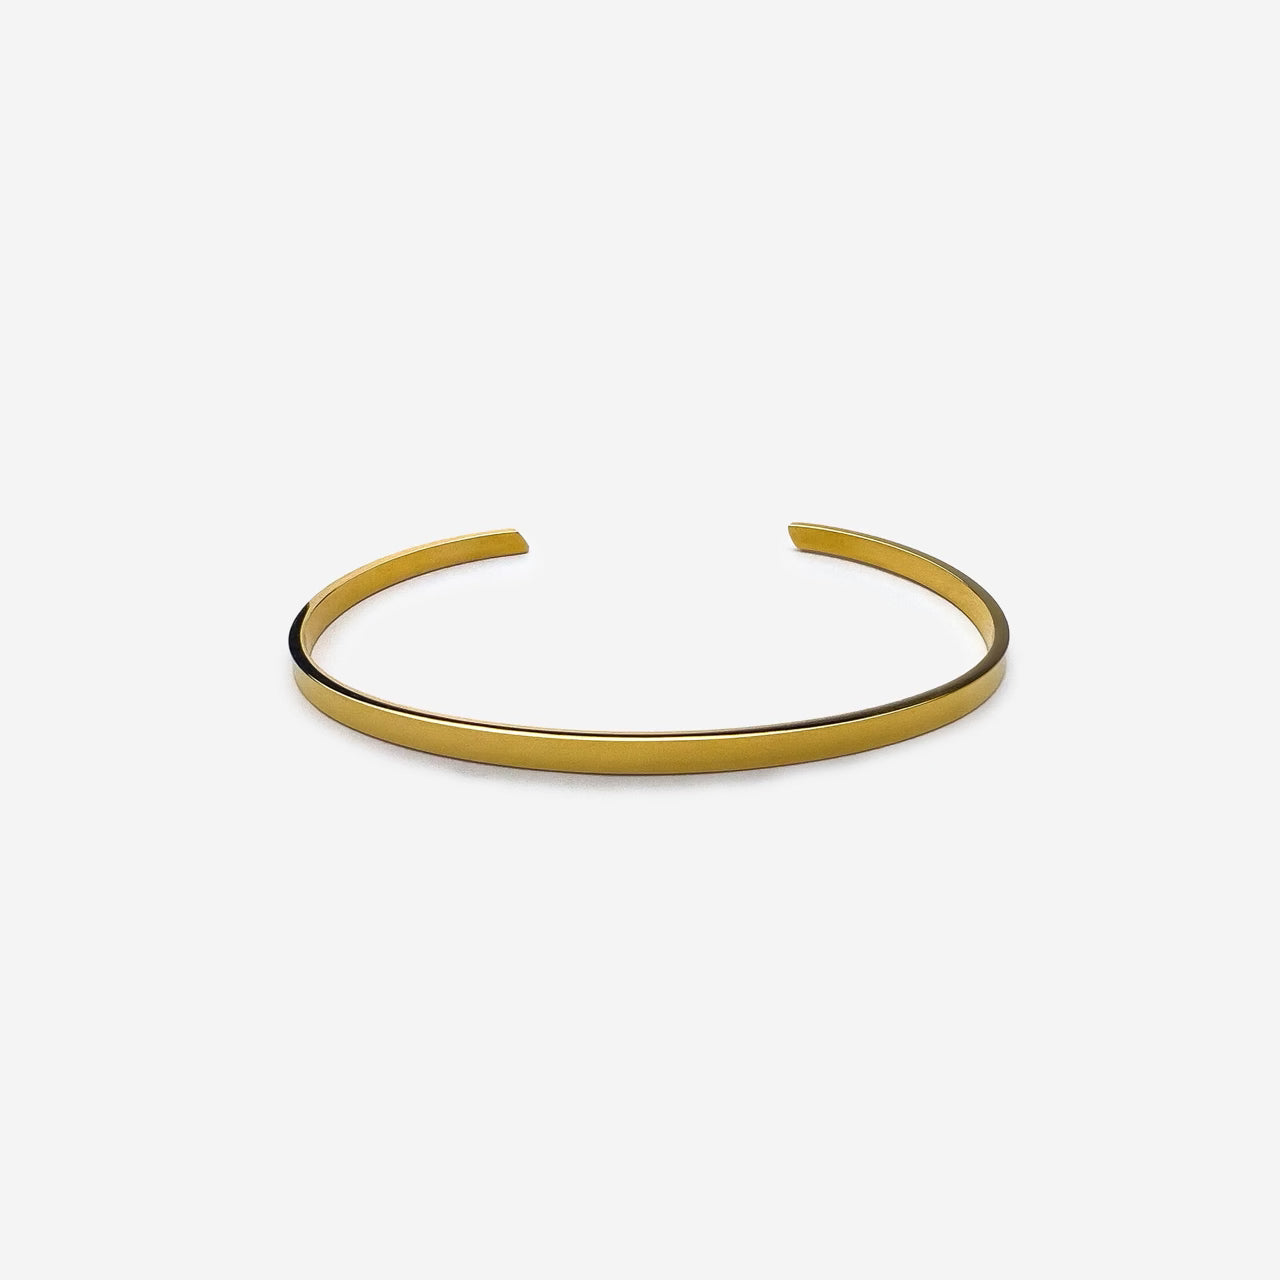 Minimalistic Bracelet Gold - Velvilo